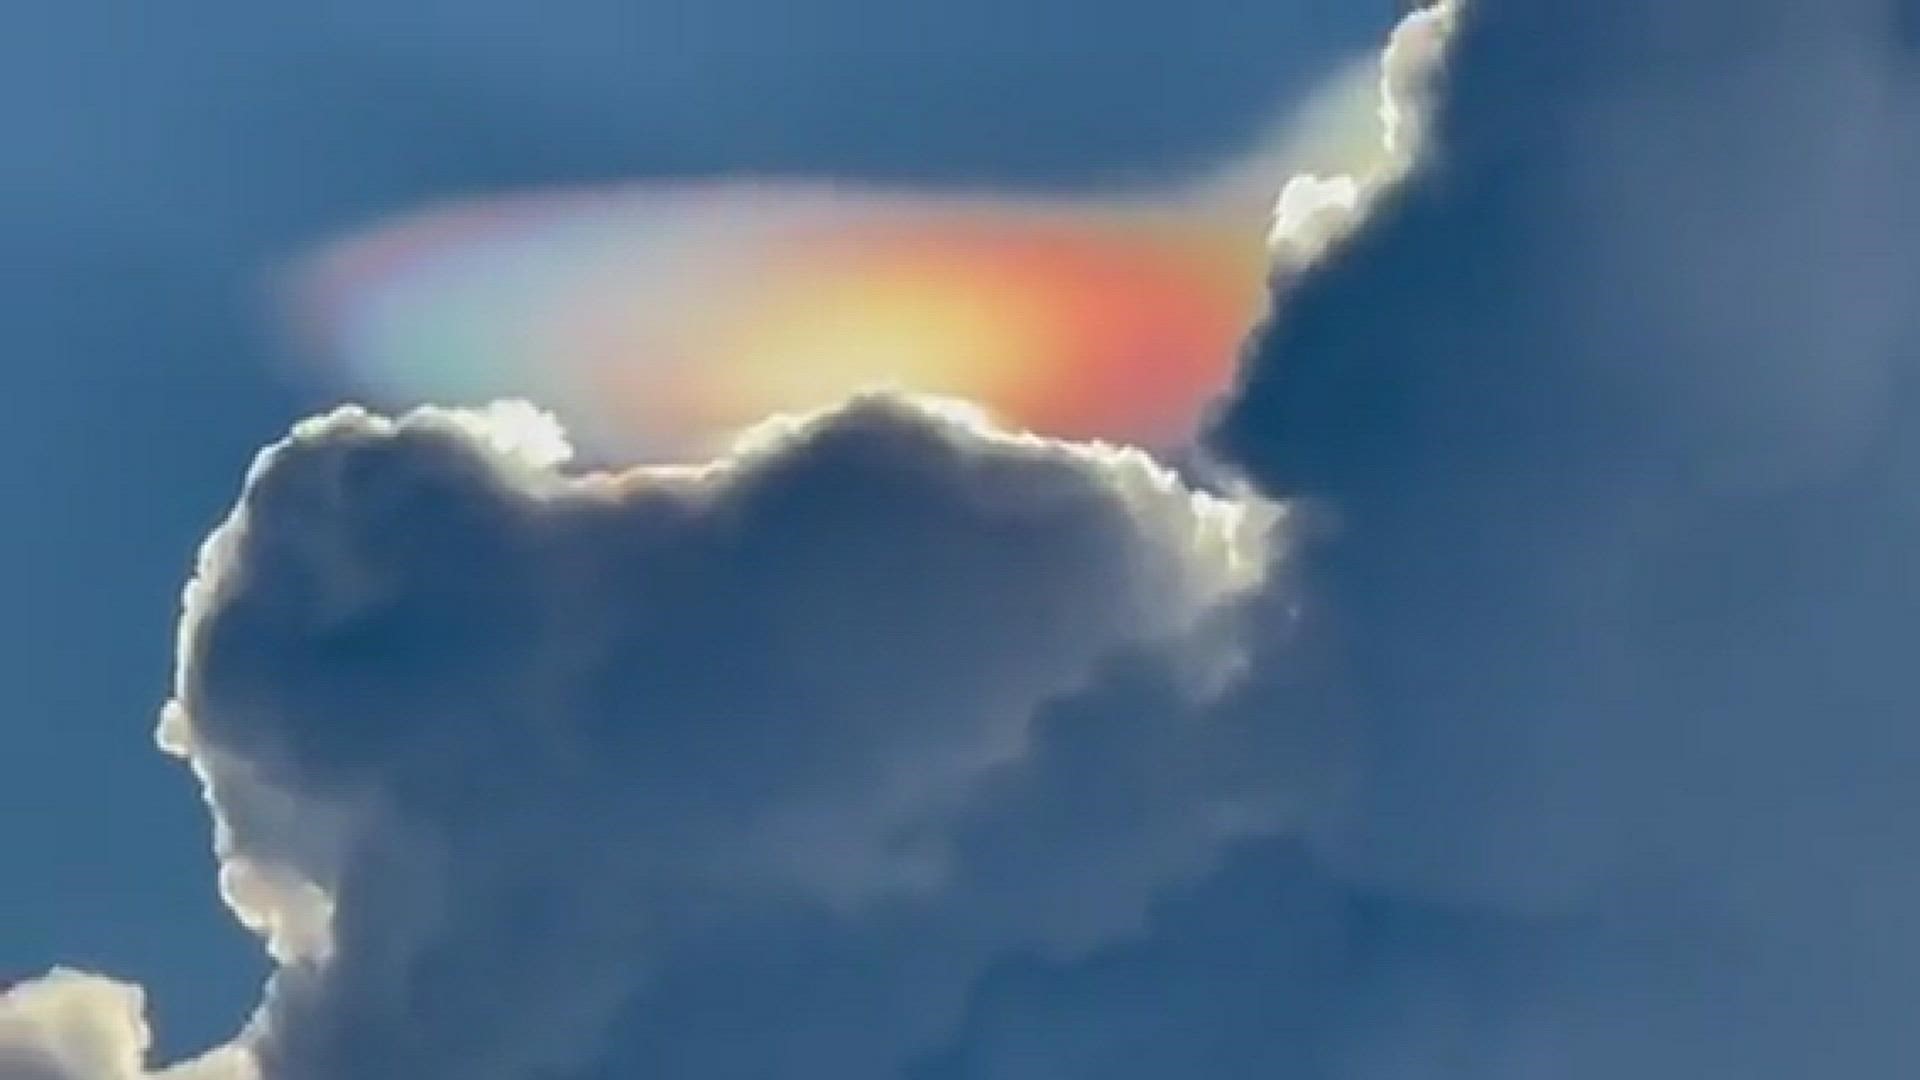 Topper Shutt explains what this rare 'rainbow cloud.' is.